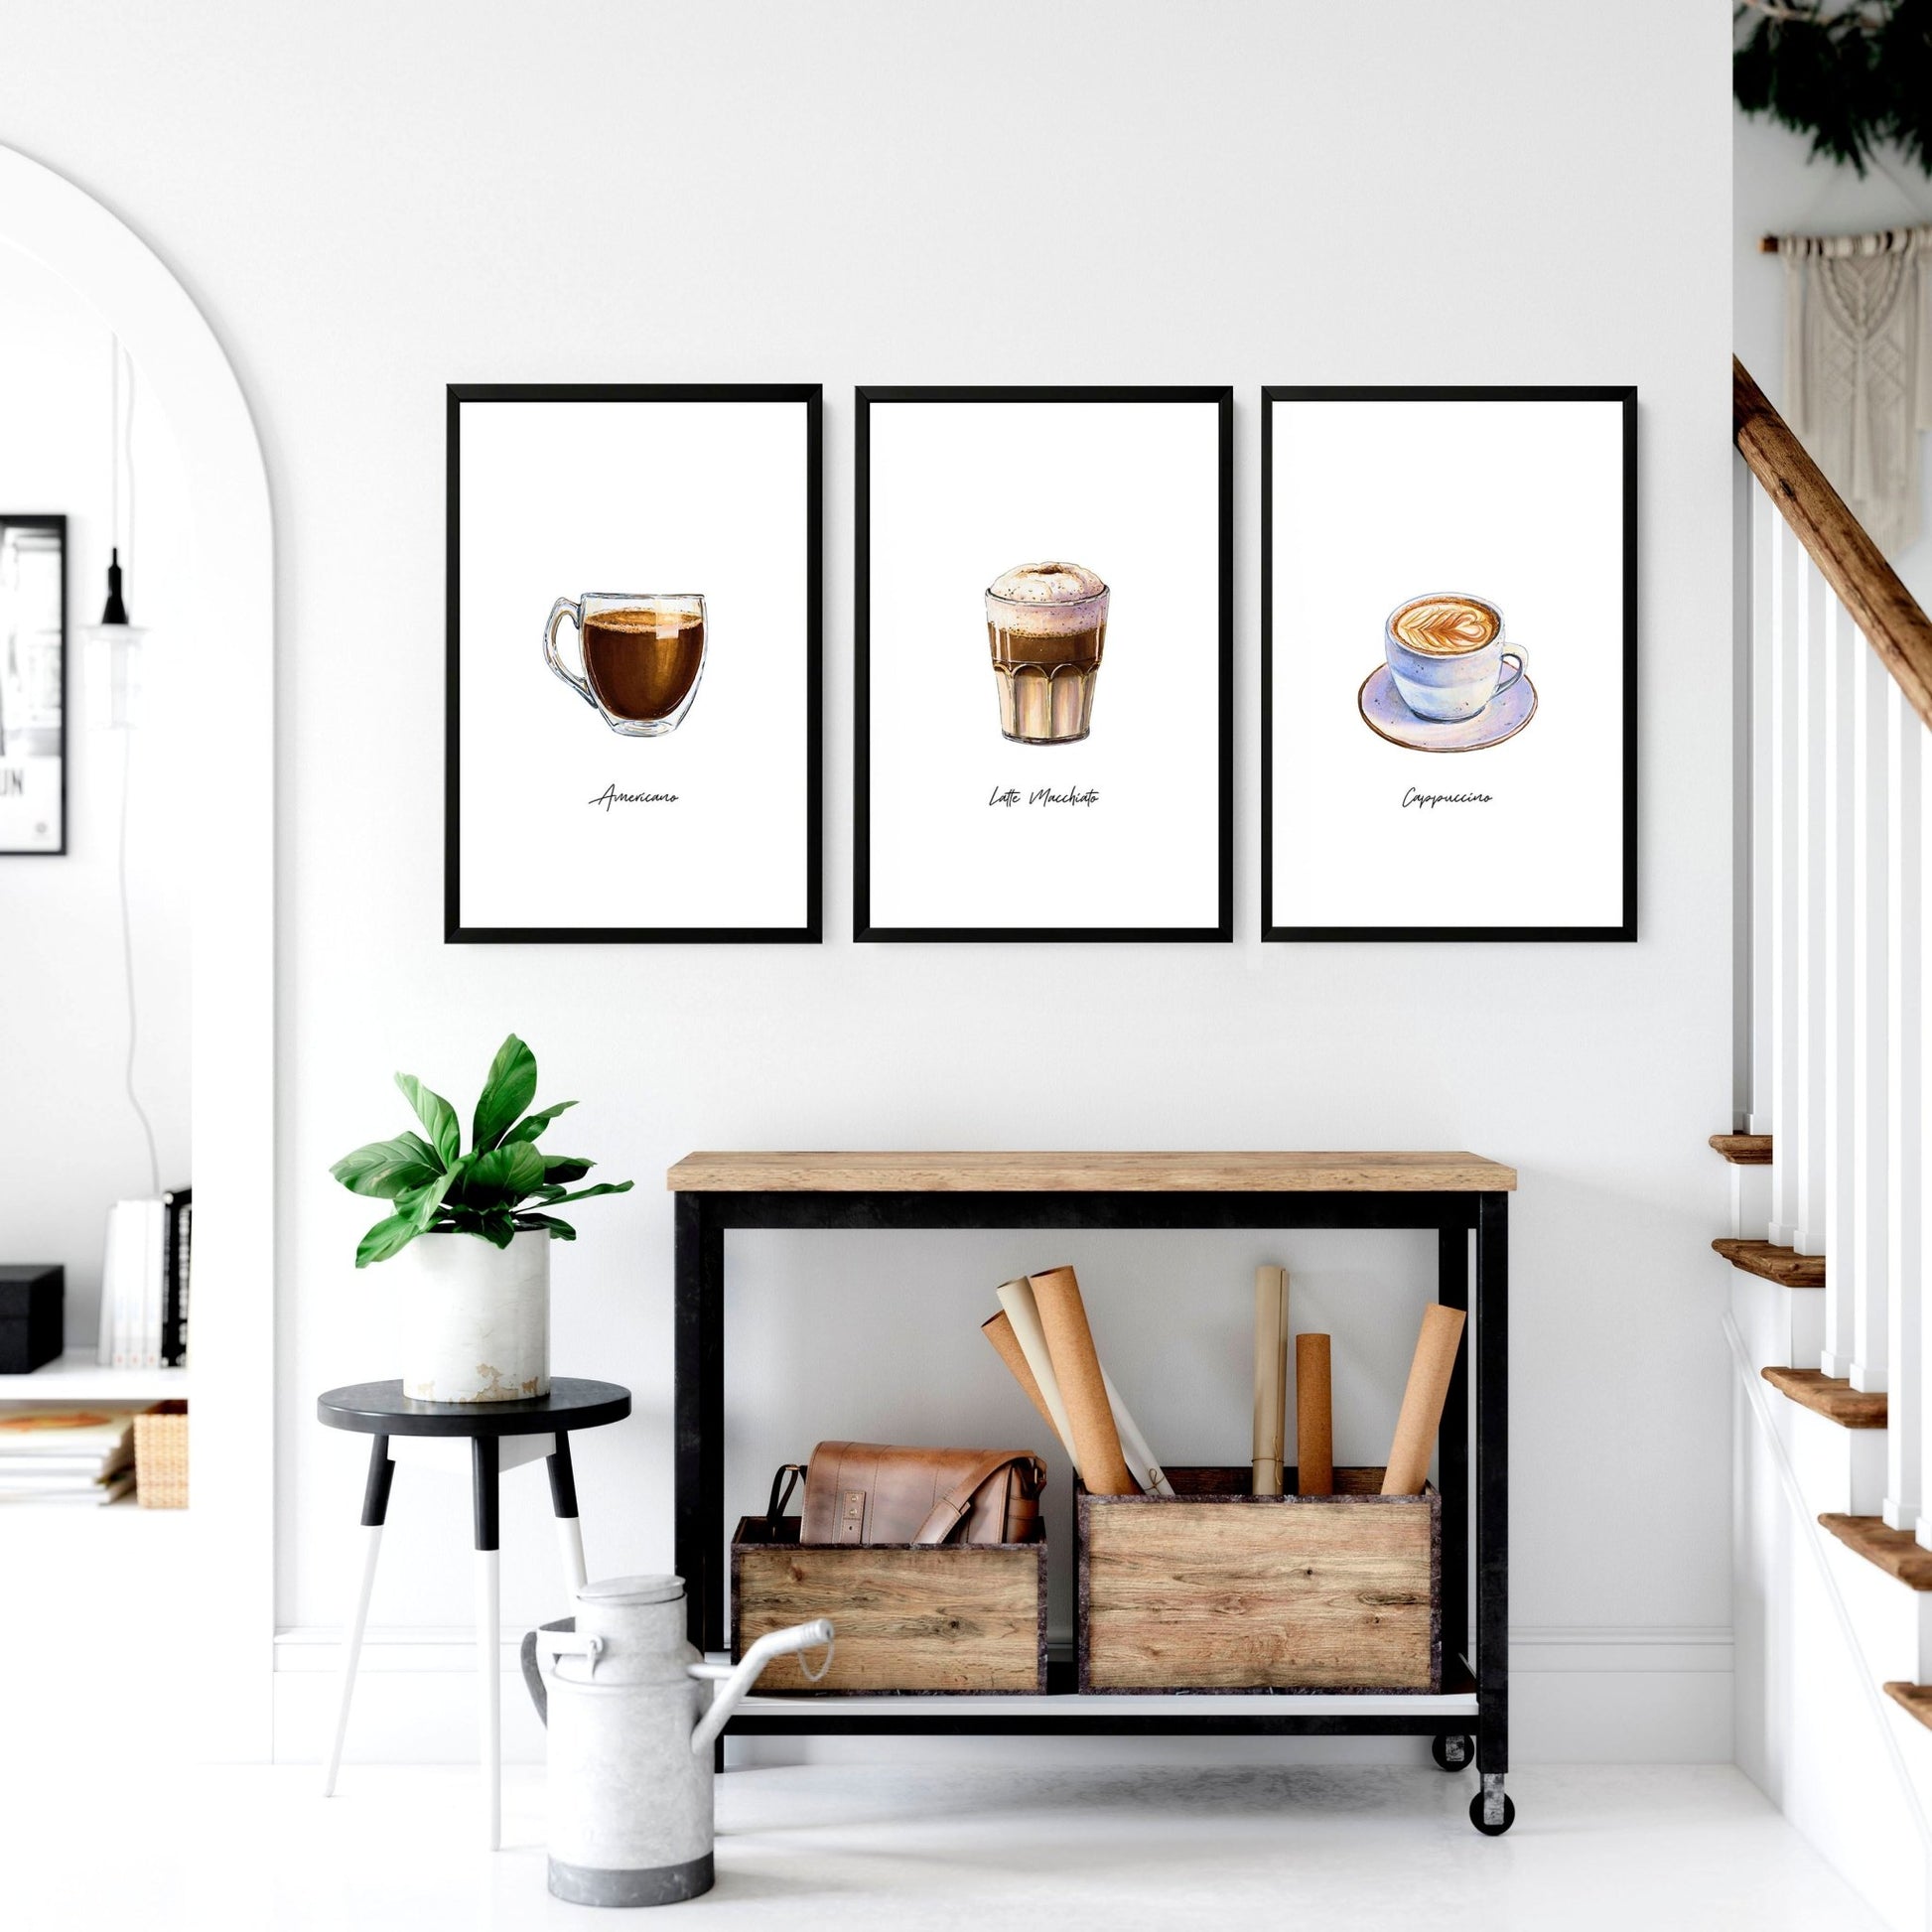 Coffee station decor | set of 3 wall art prints - About Wall Art